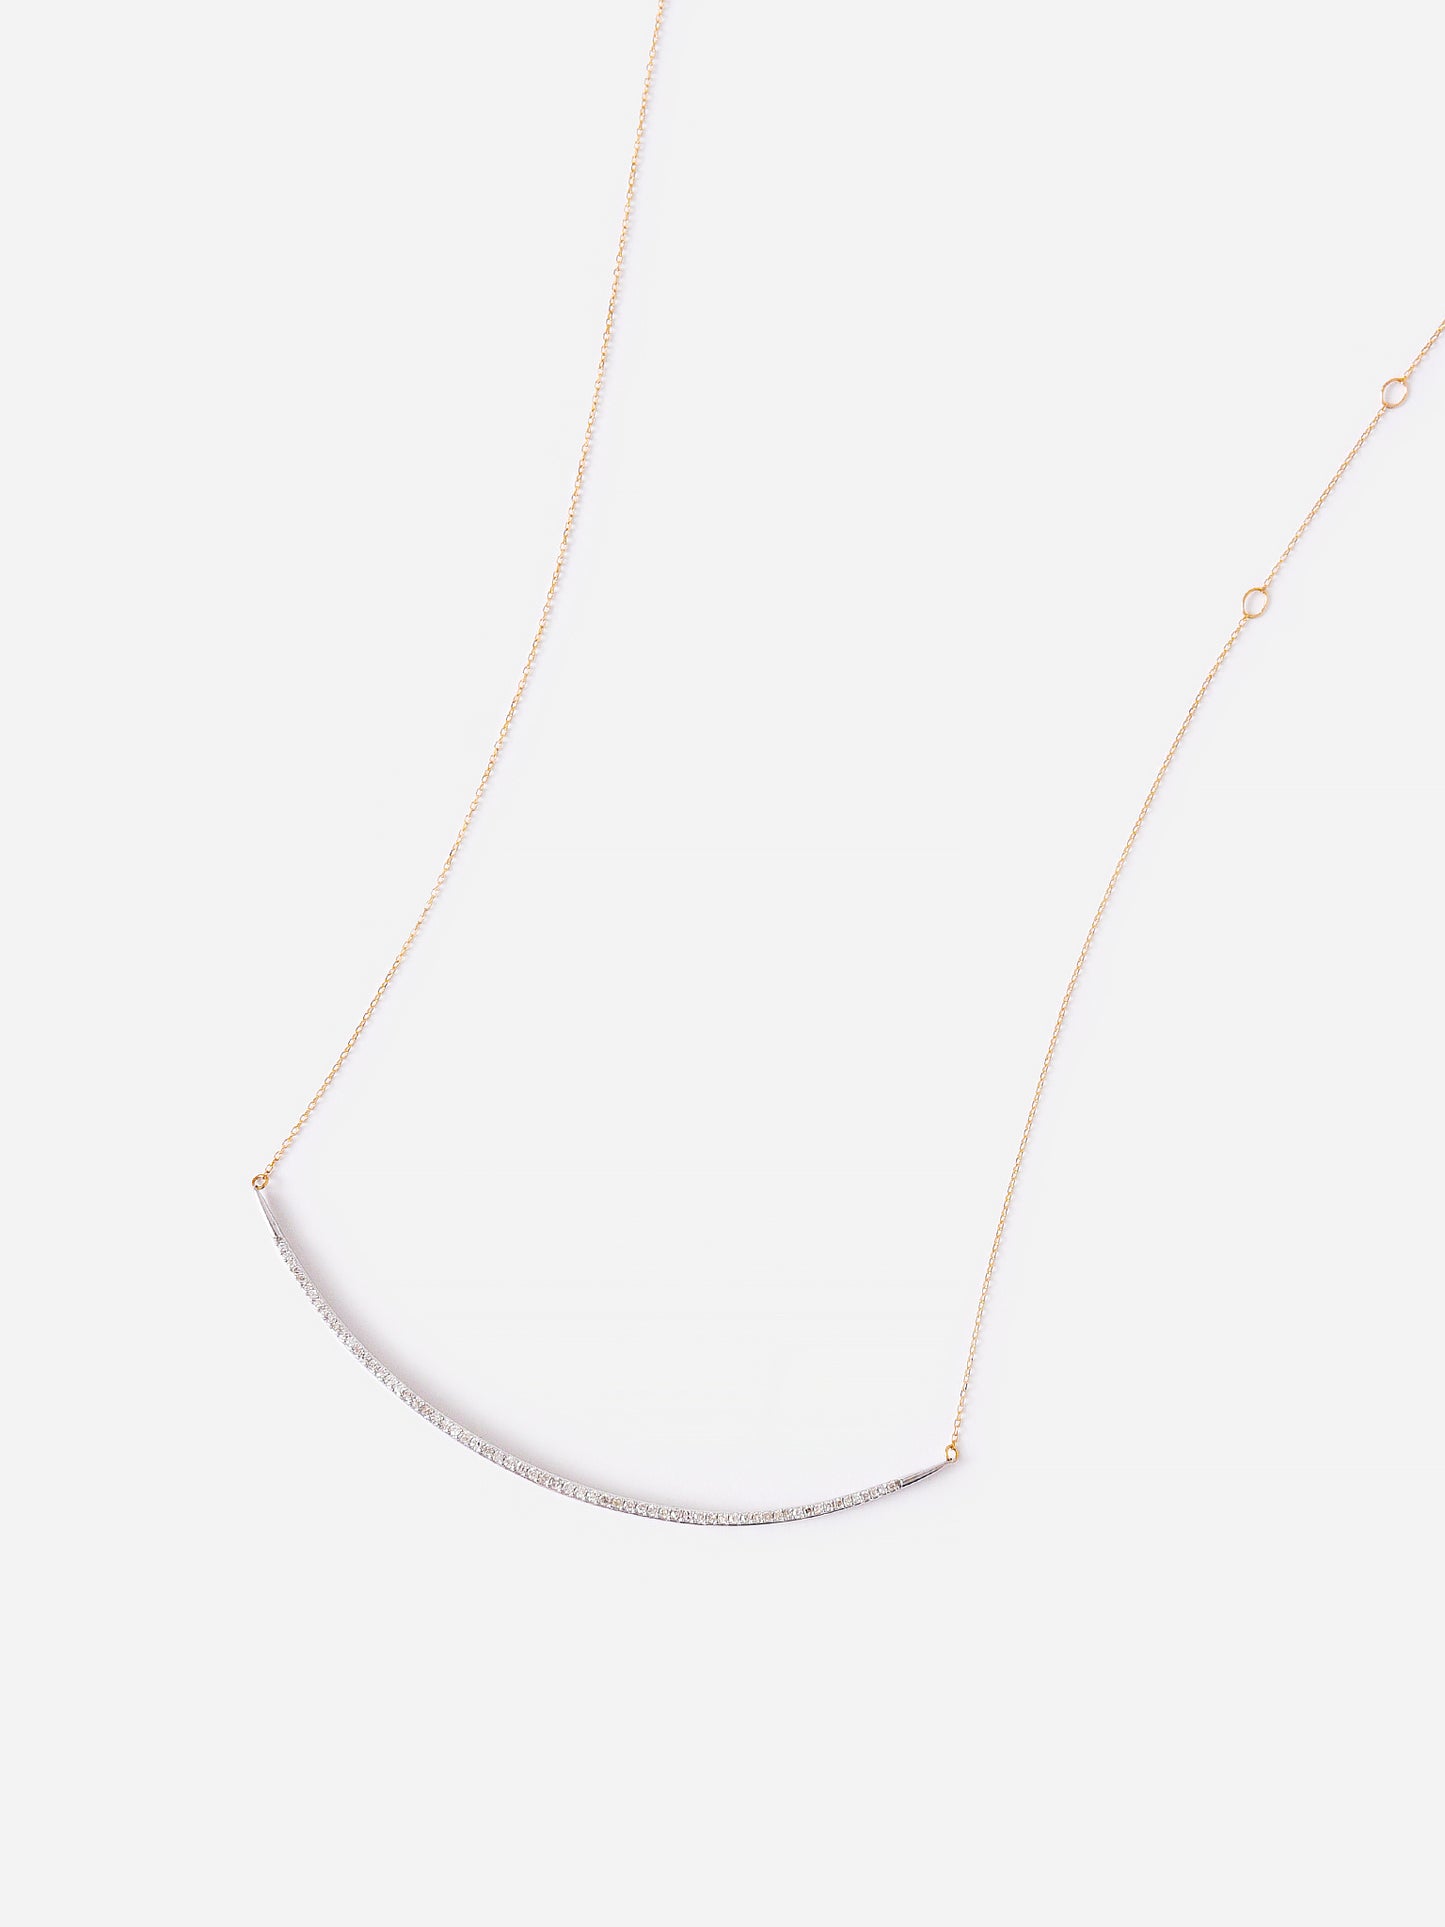 Adina Reyter Women's Pavé Curve Collar Necklace